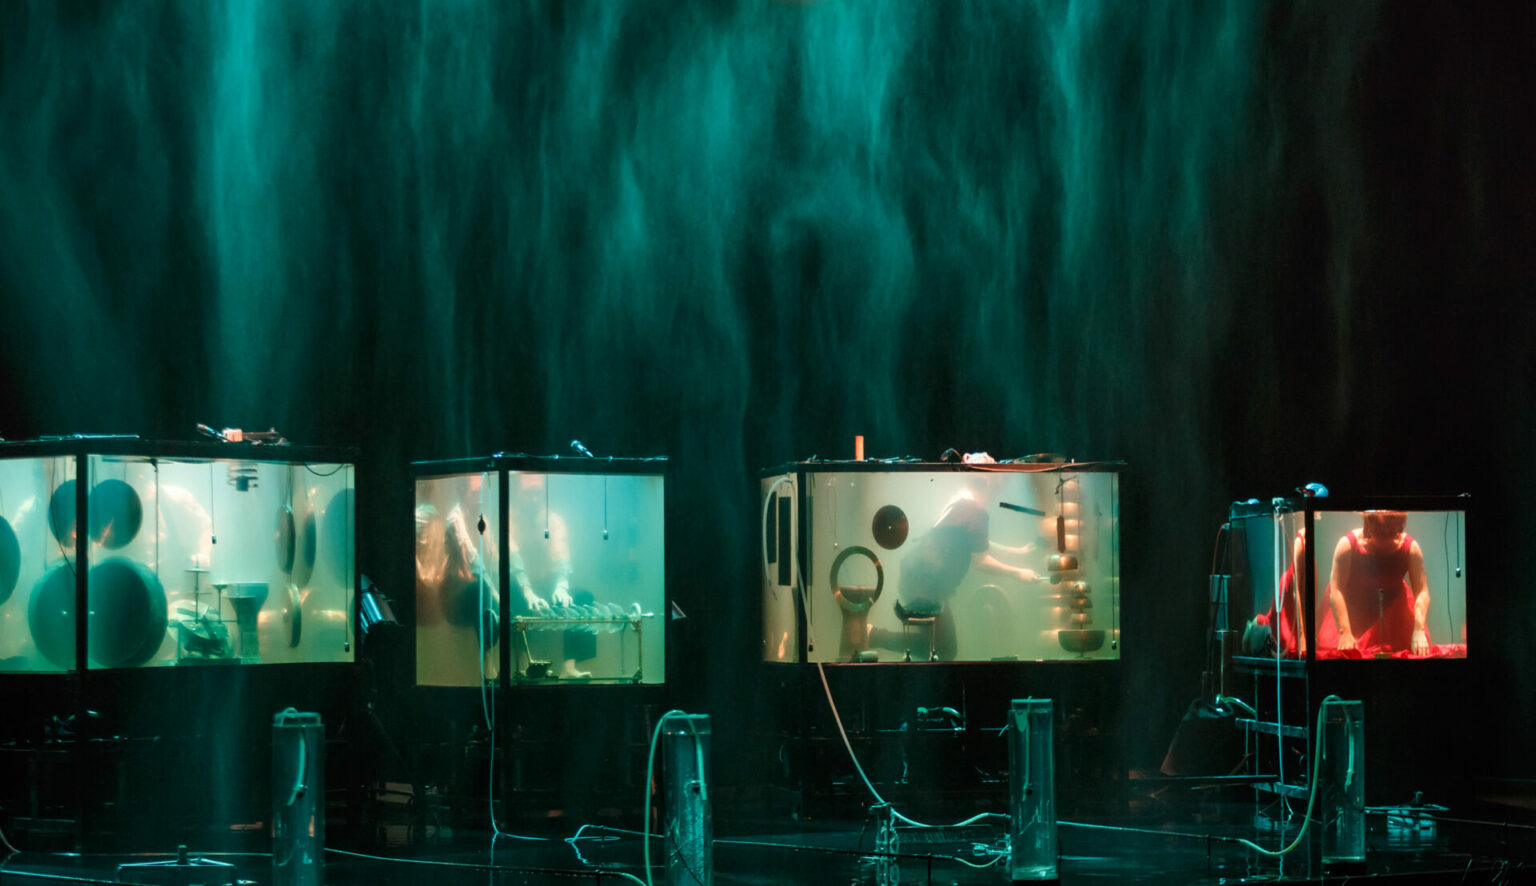 The performance “Aquasonic” - part of IETM Aarhus 2023 at the dance theater Bora Bora